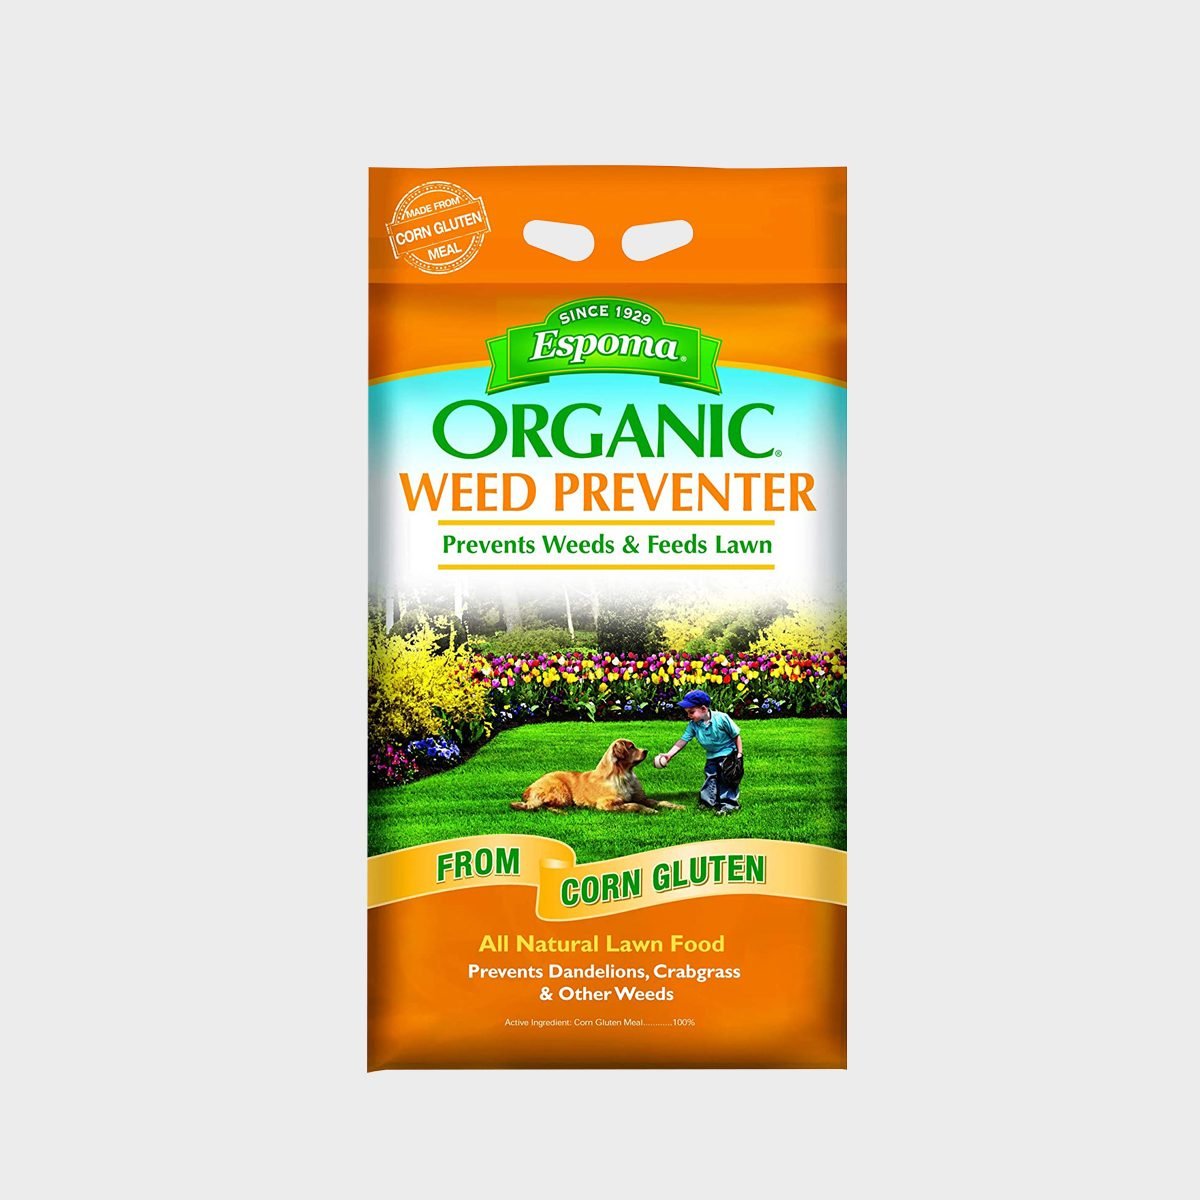 Espoma Organic Weed Preventer Ecomm Amazon.com